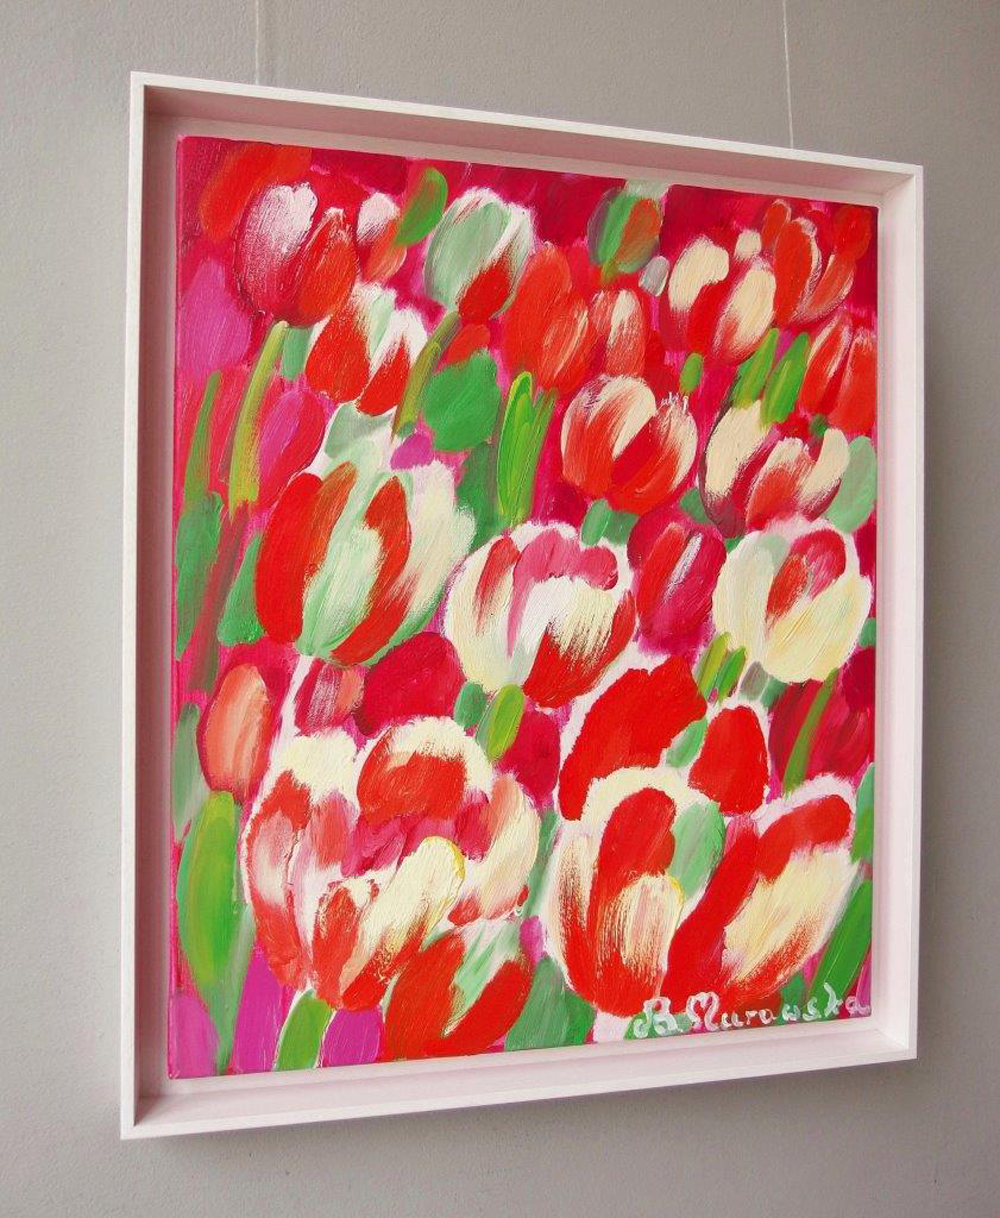 Beata Murawska - Virgin tulips (Oil on Canvas | Größe: 56 x 66 cm | Preis: 3800 PLN)